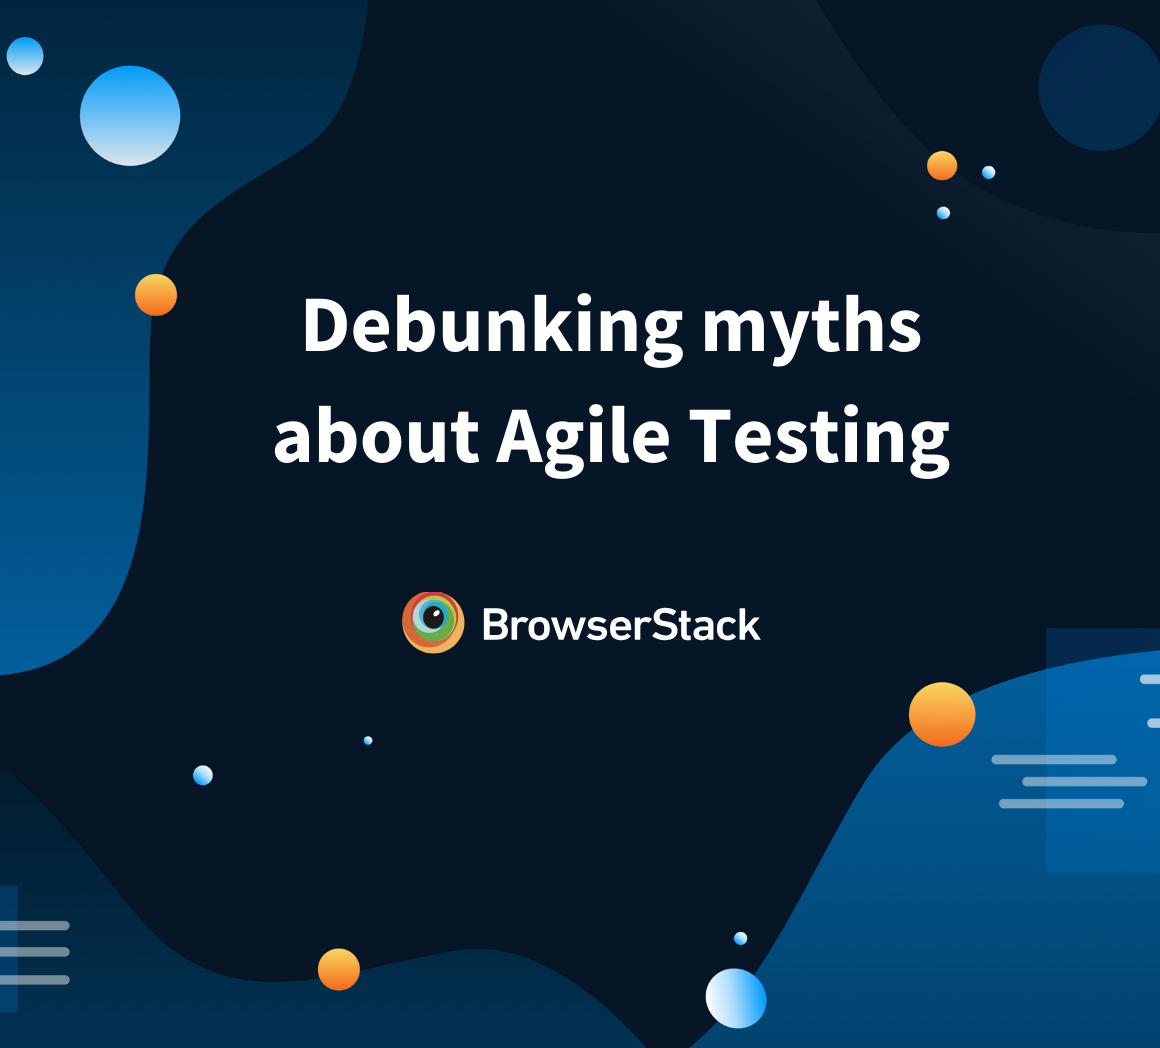 Myths about agile testing